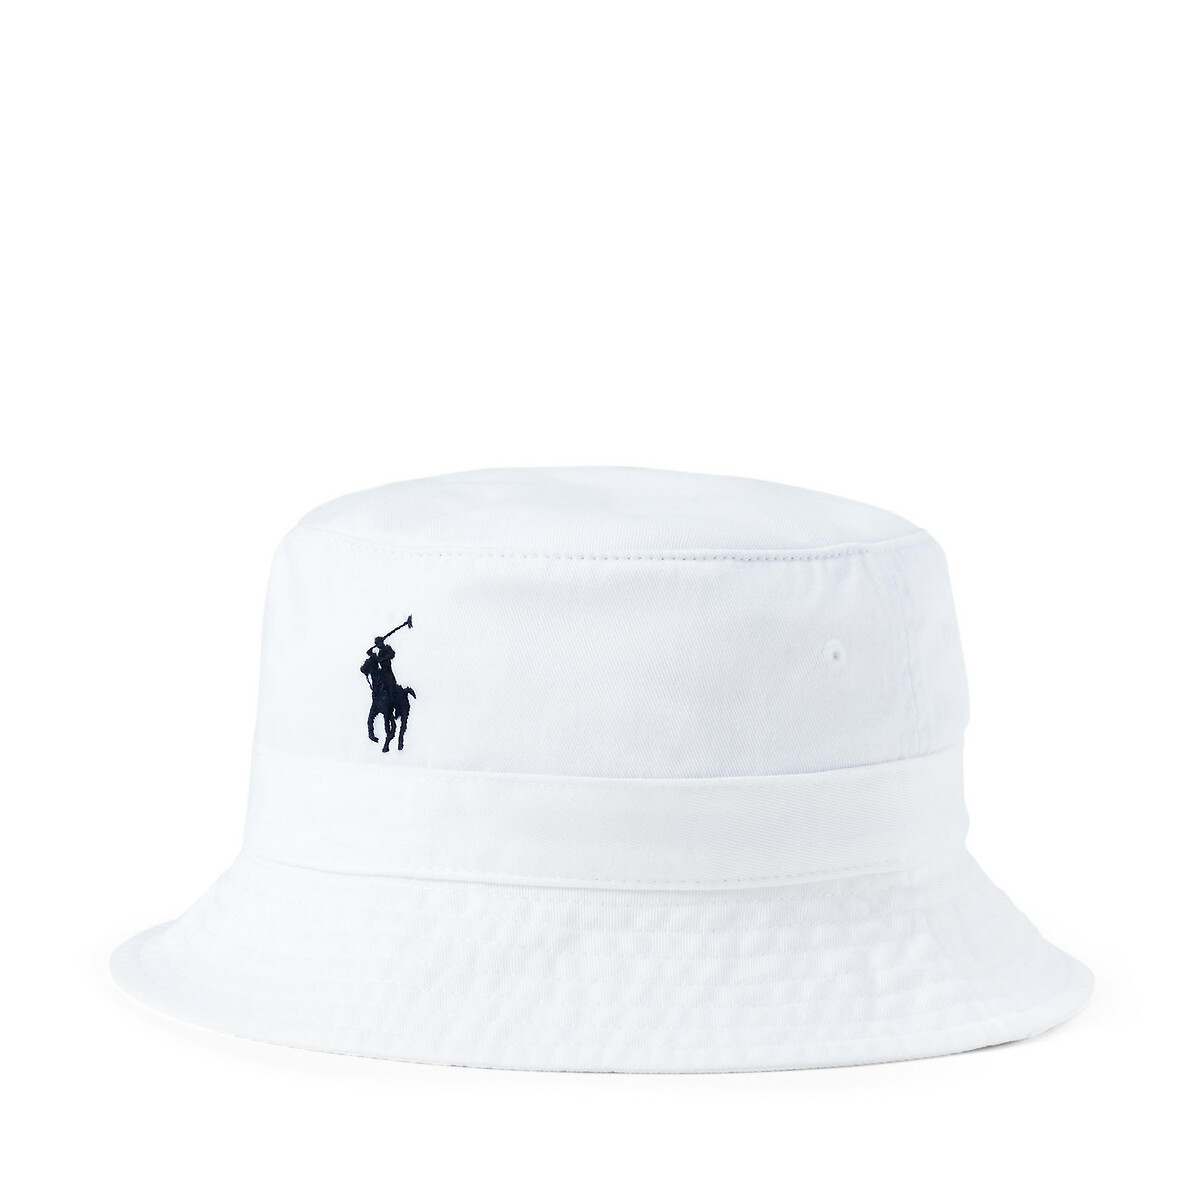 Шляпа-боб LaRedoute Polo Player S/M белый, размер S/M